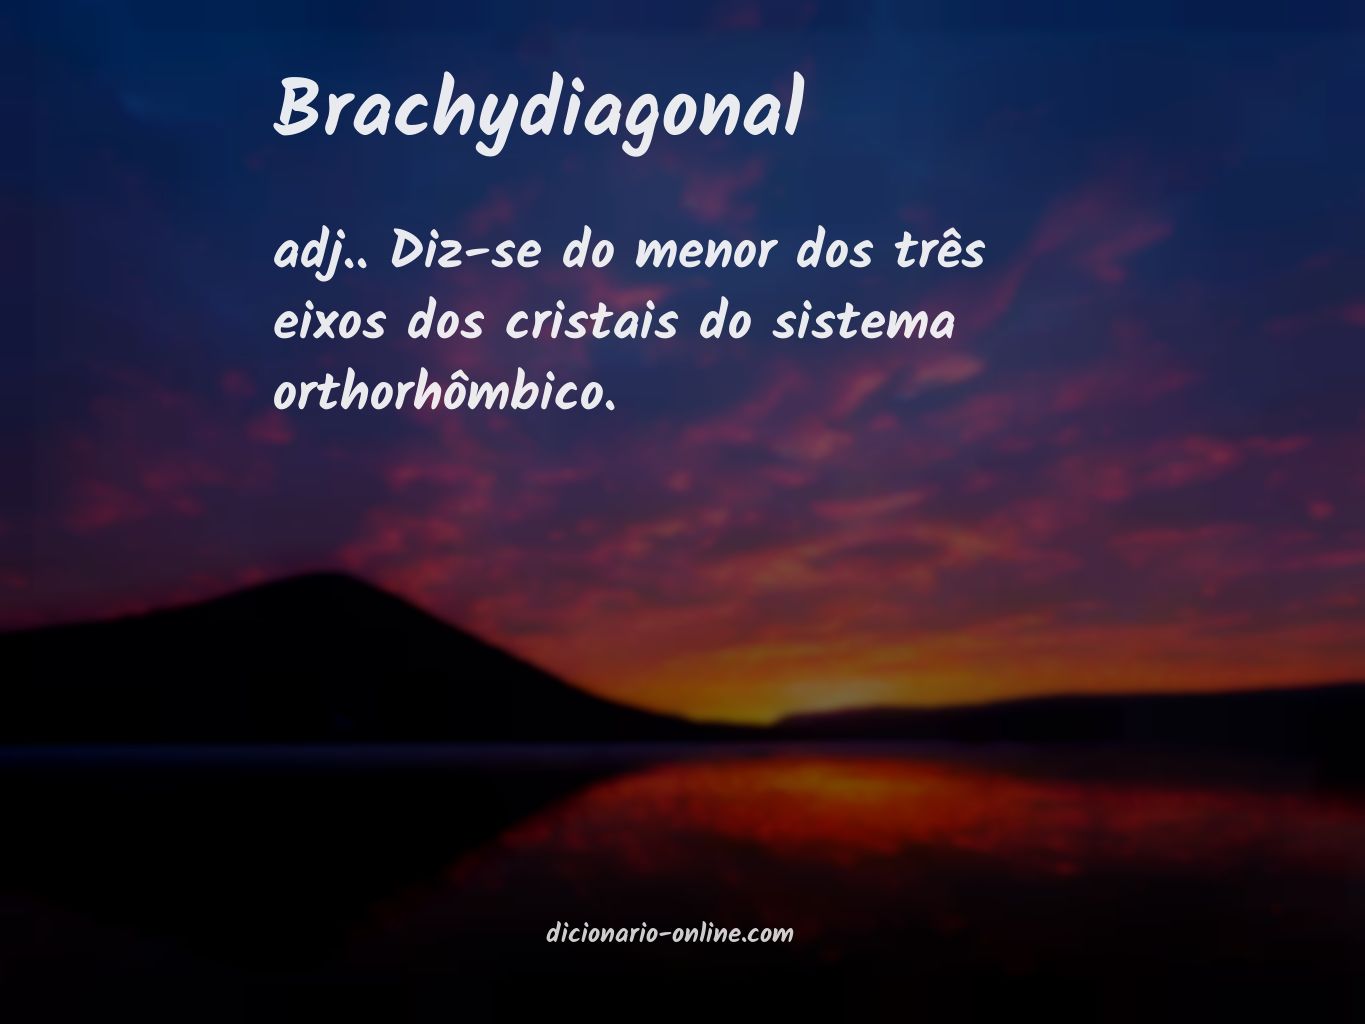 Significado de brachydiagonal